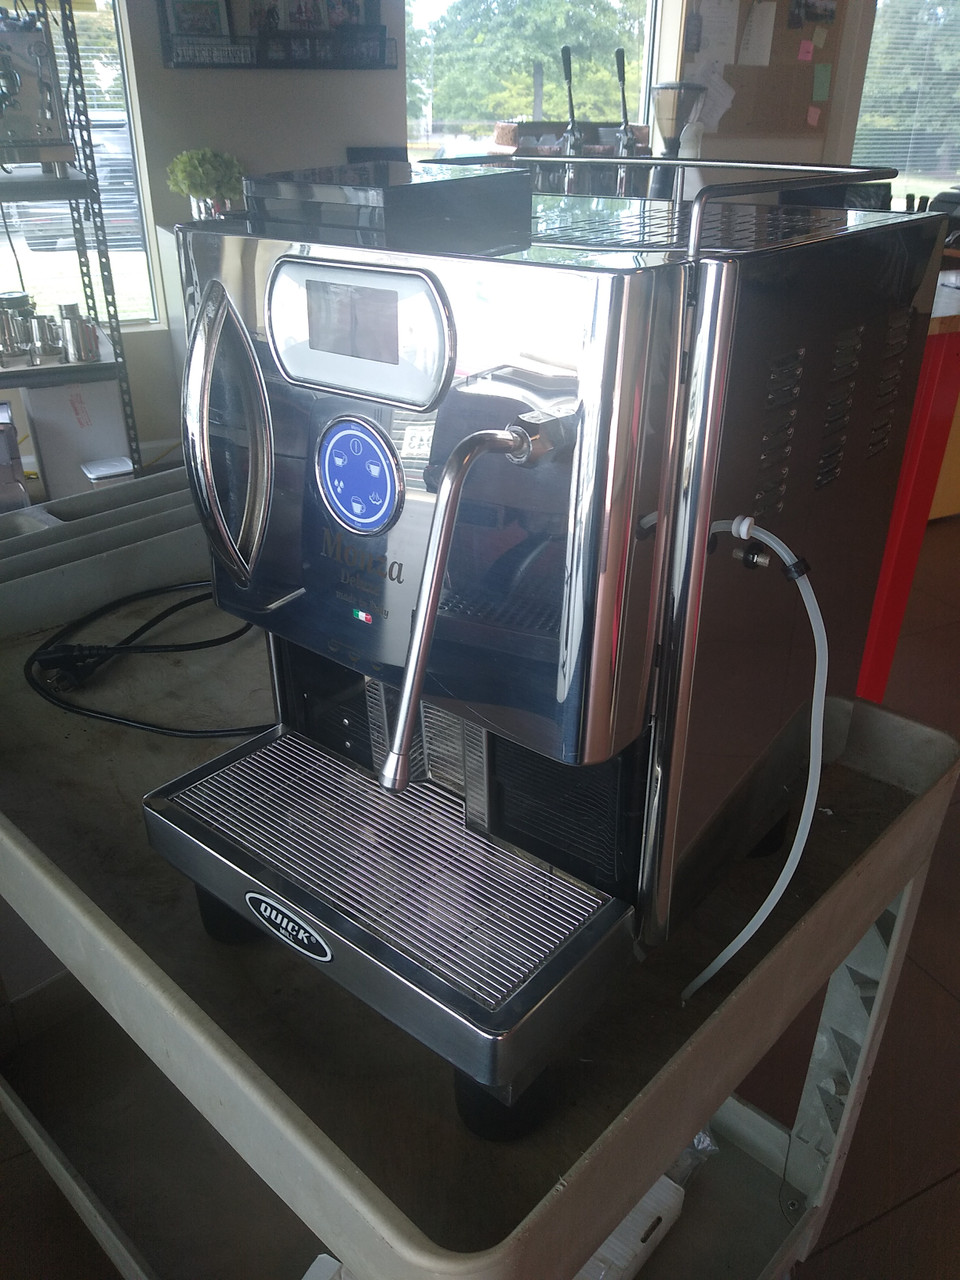 Quickmill Monza Super Automatic Espresso Coffee Machine Certified